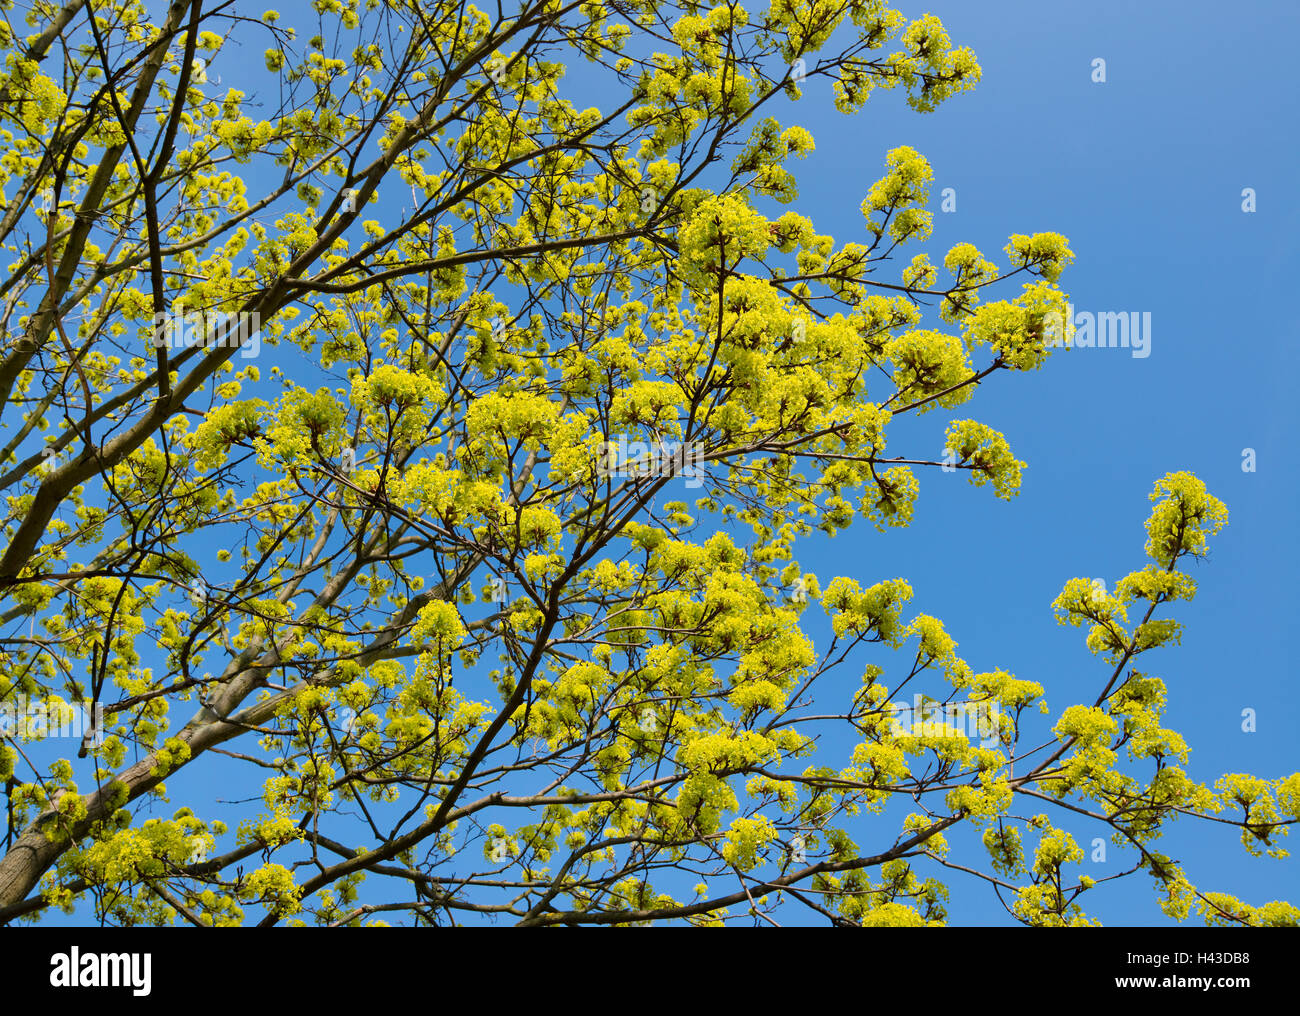 Norway maple (Acer platanoides), flowering, blue sky, Thuringia, Germany Stock Photo